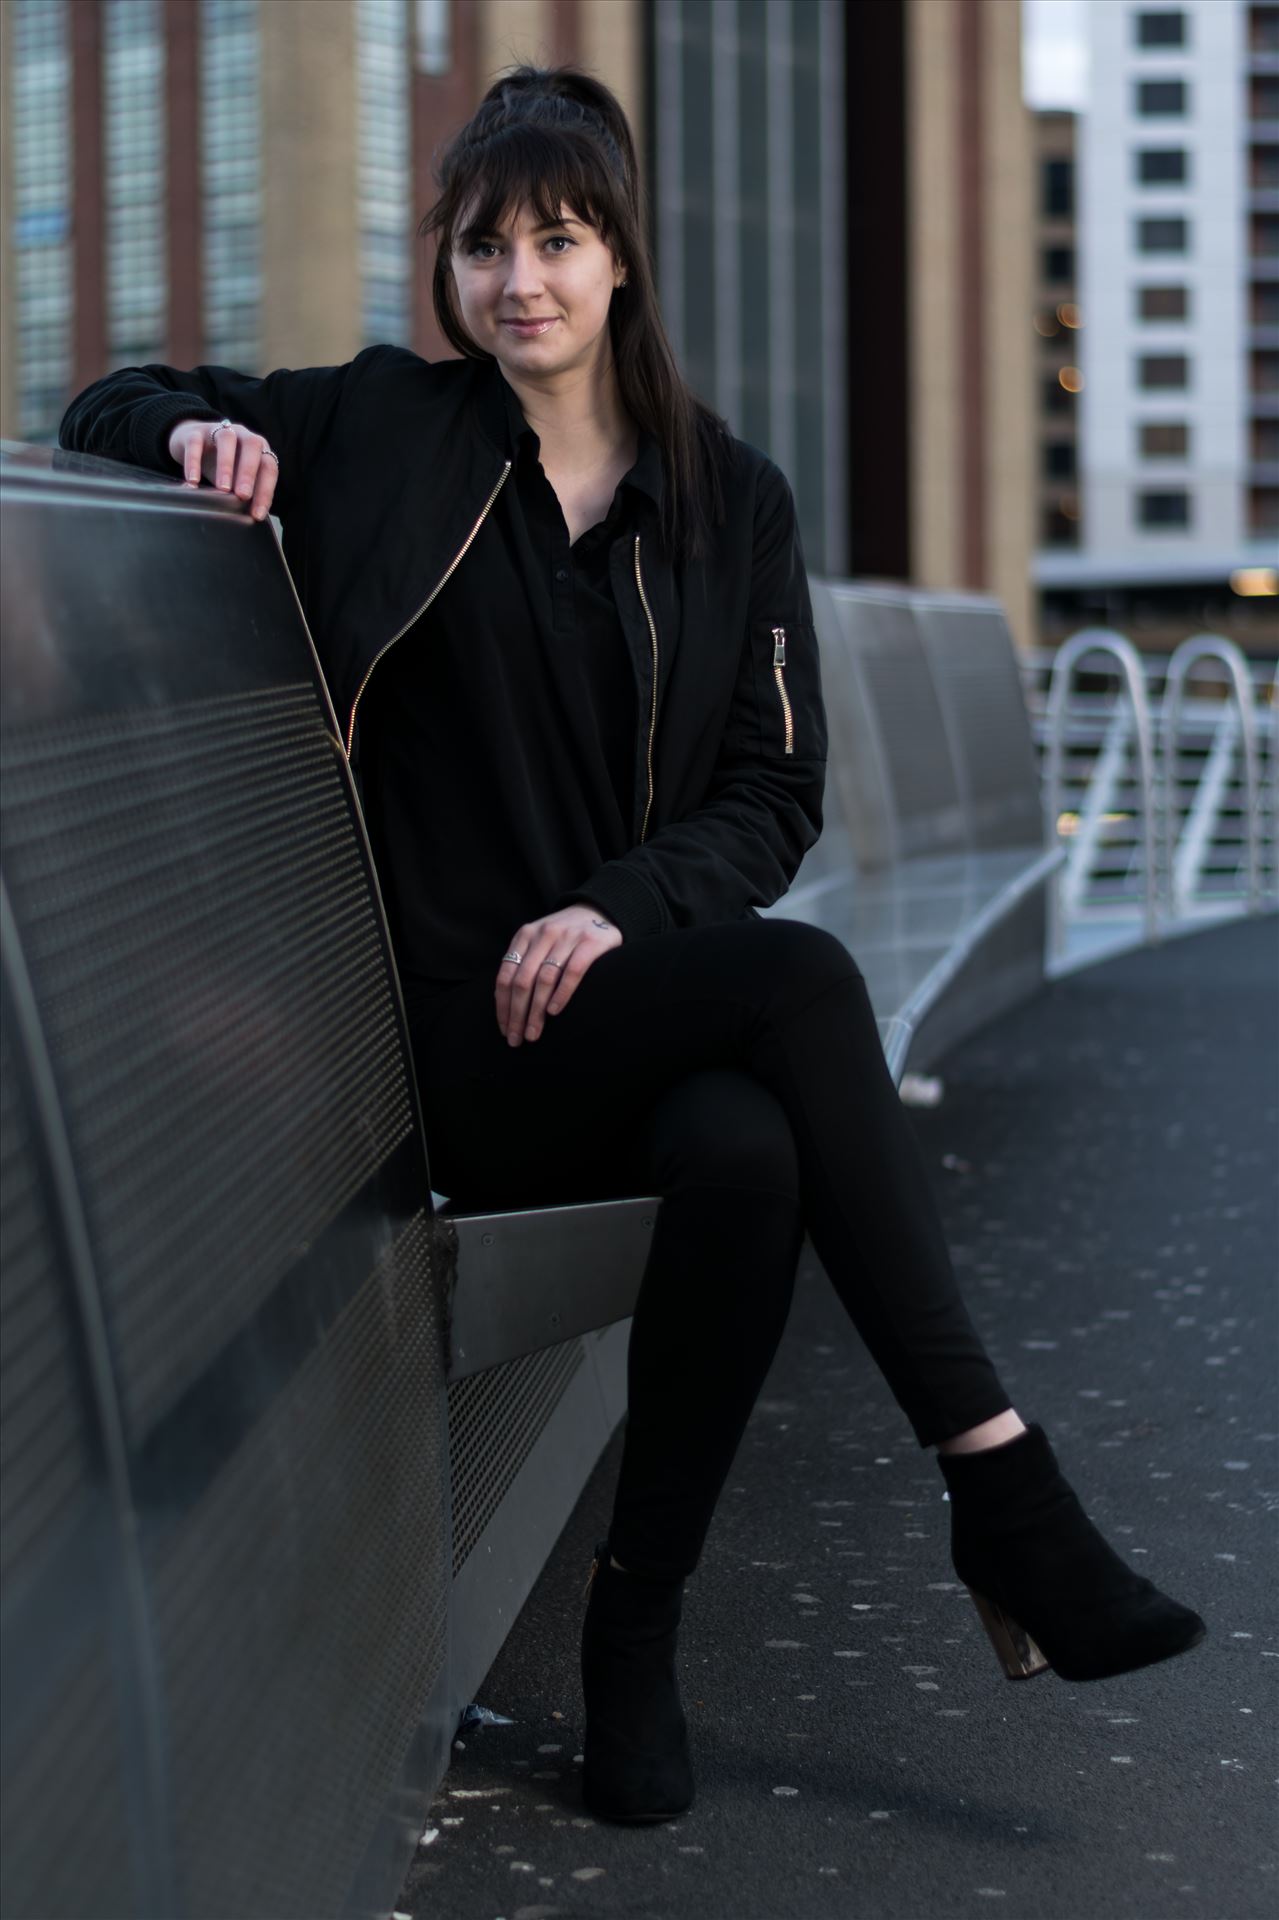 Rachel Louise Adie - Rachel Louise Adie modelling shoot at Newcastle Quayside by AJ Stoves Photography